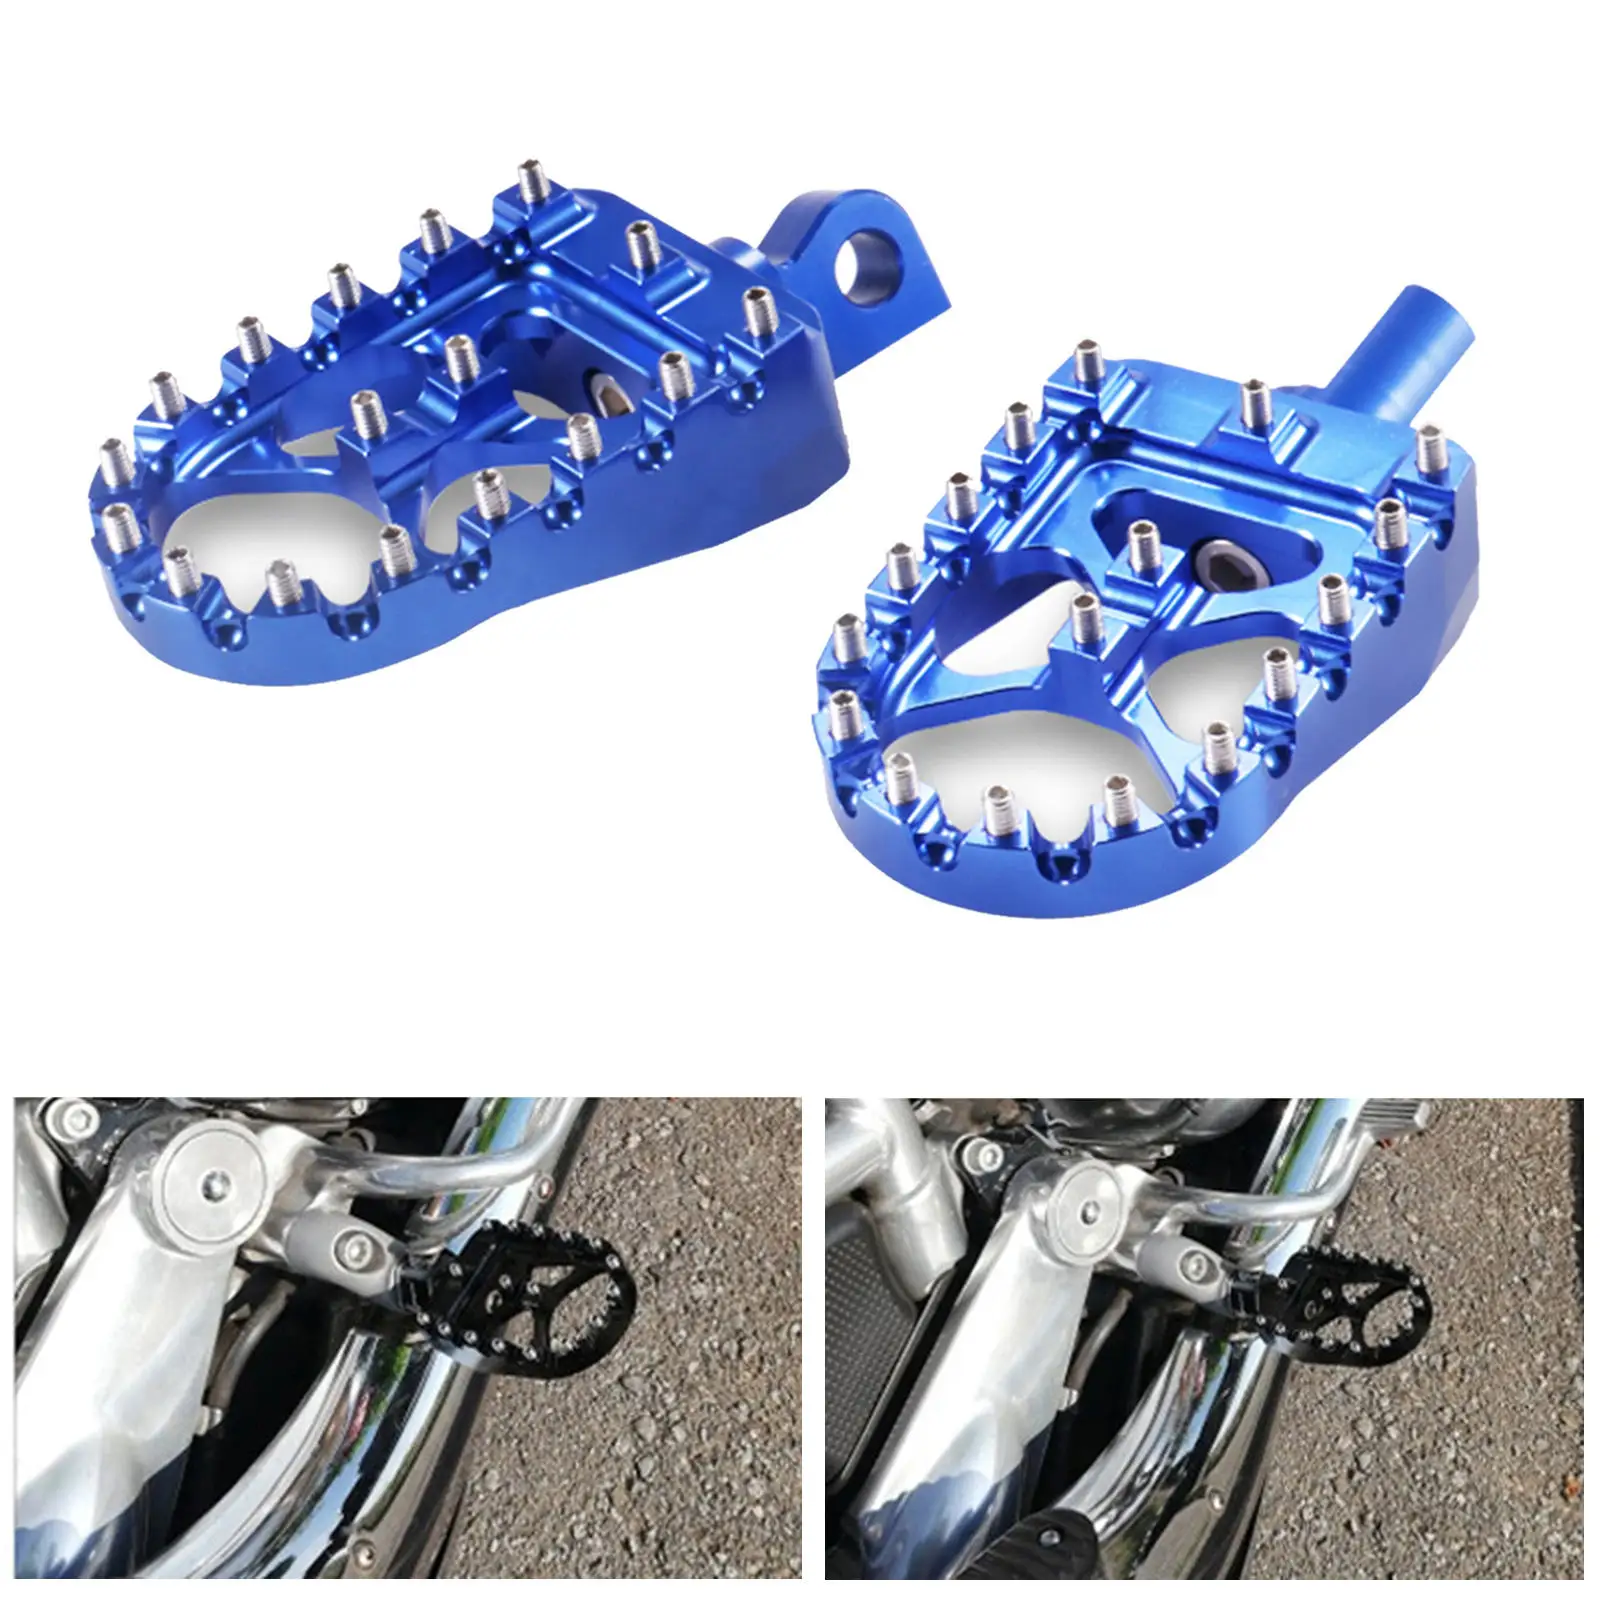 Anodized Aluminum Alloy Motorcycle Footrests Footpegs for Harley XL883 XL883R XL883C XL1200C XL1200R 2007-2010